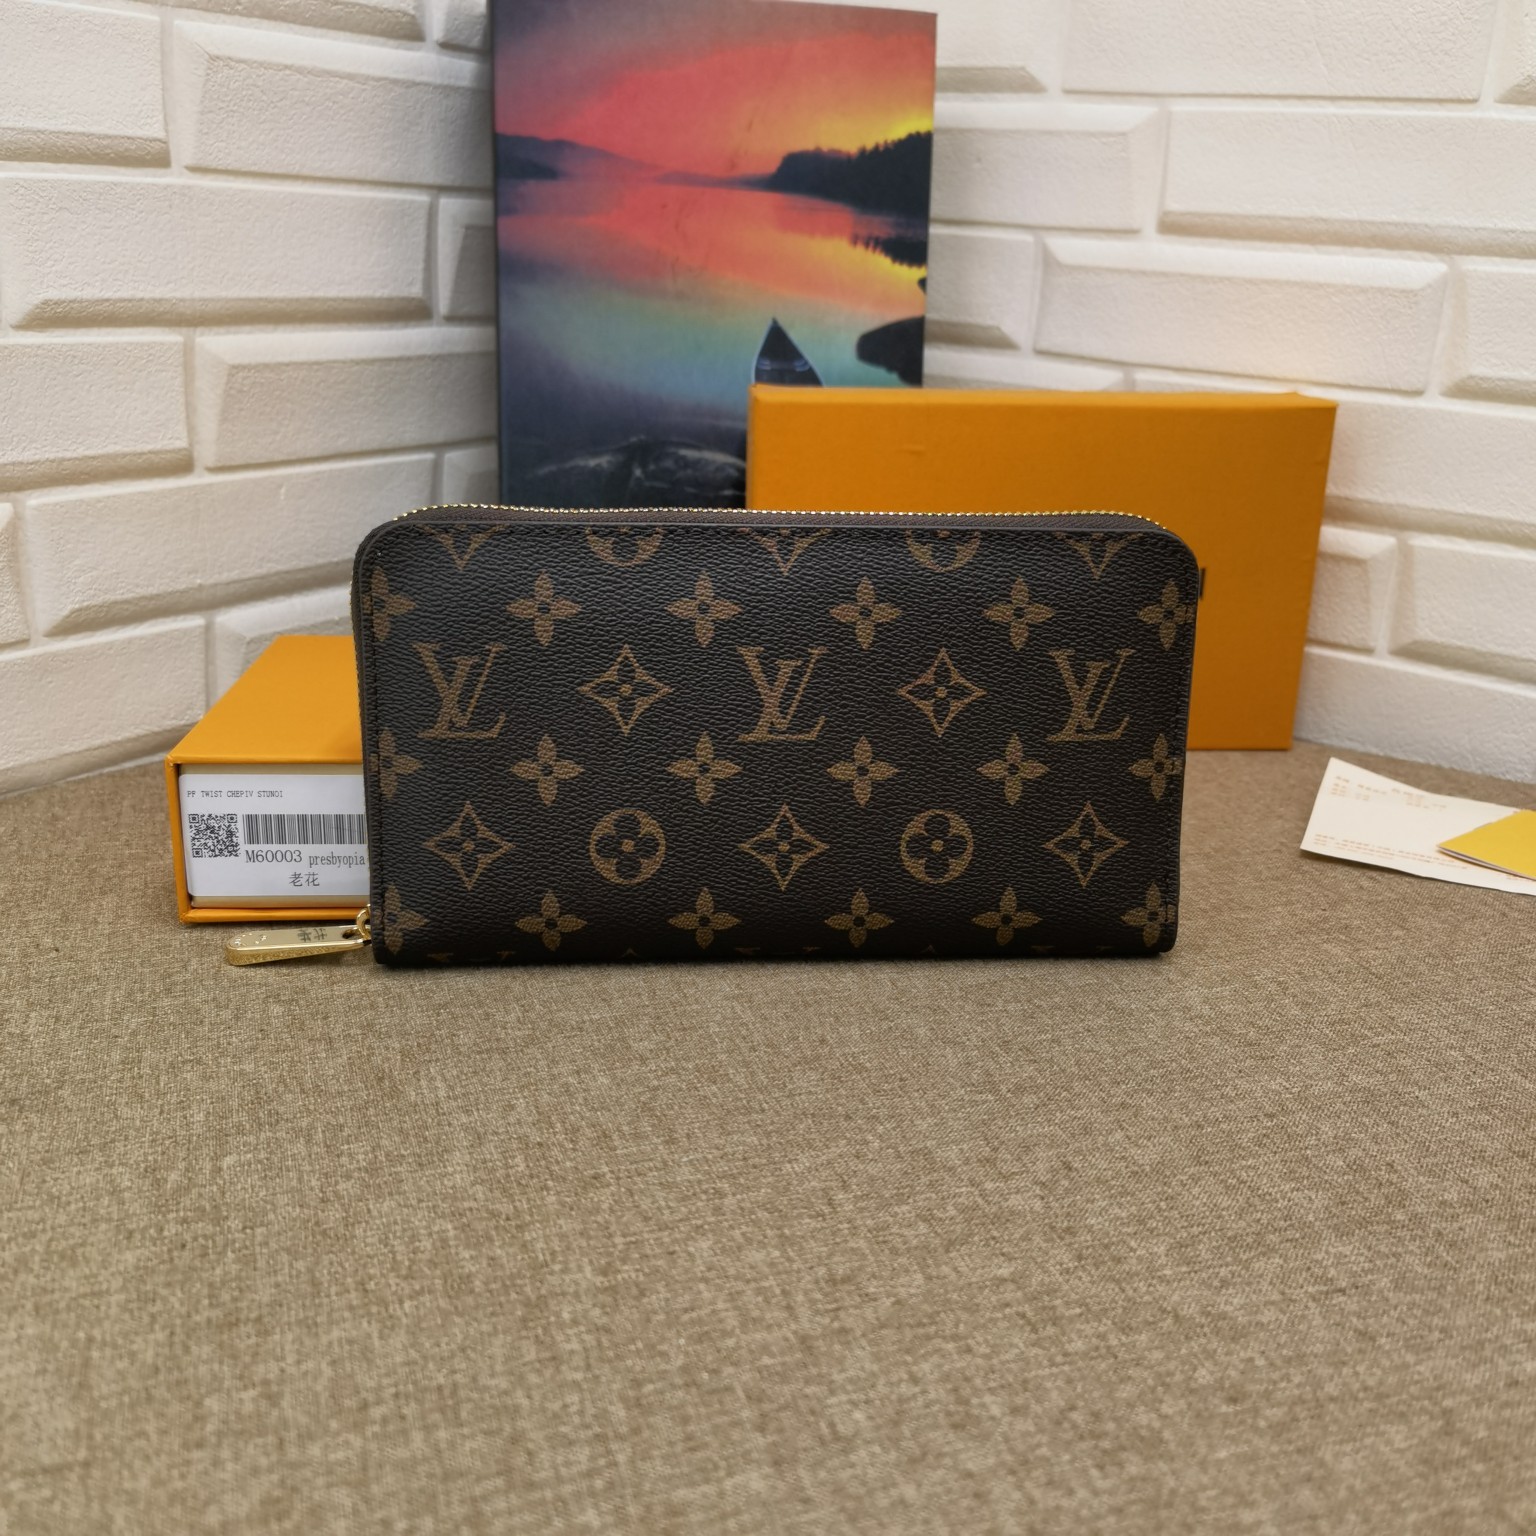 Louis Vuitton Wallets For Women # 262481, cheap Louis Vuitton Wallet, only $36!